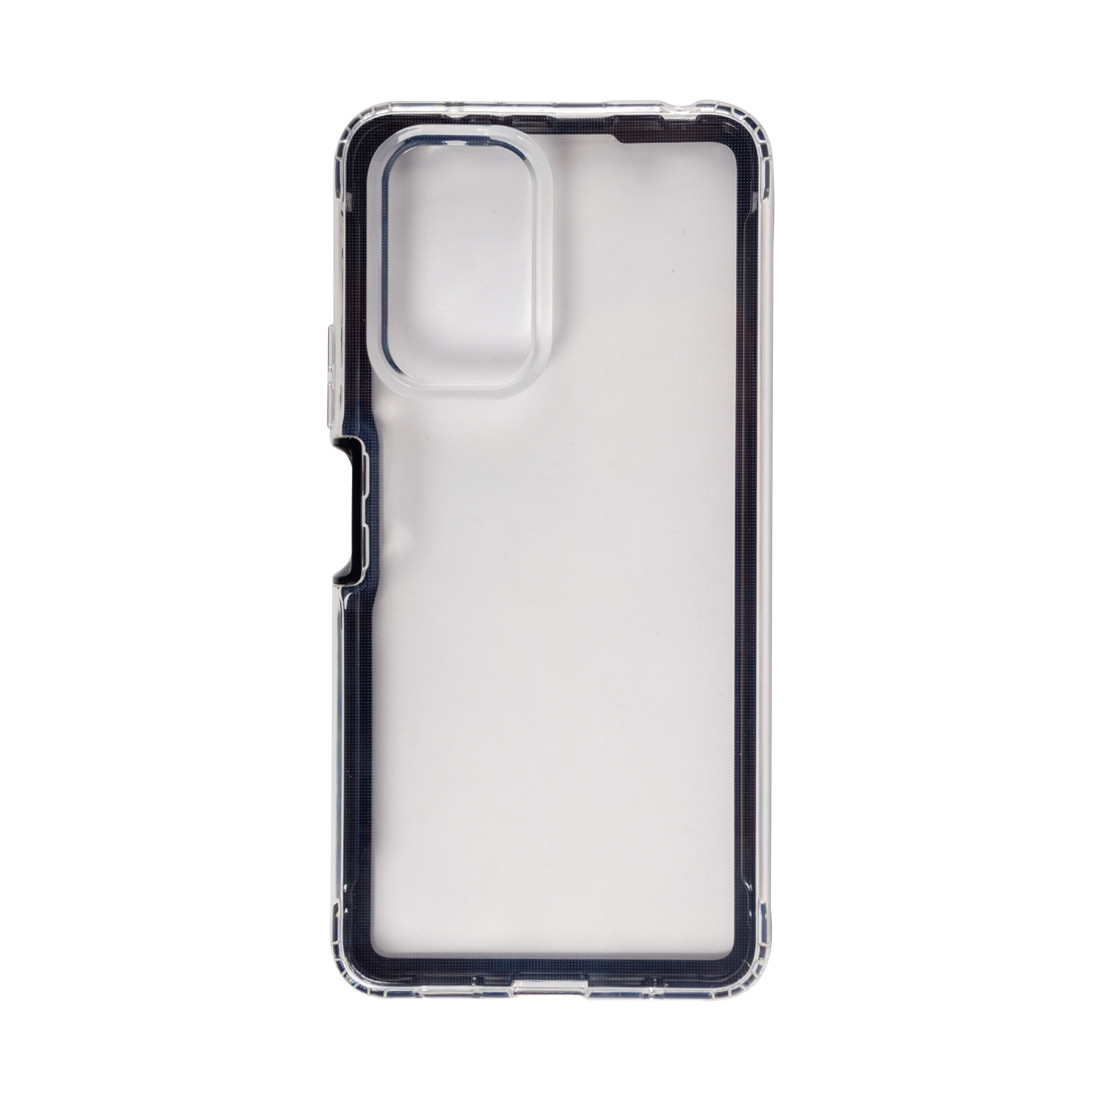 Чехол для телефона X-Game XG-BP088 для Redmi Note 10 Pro Чёрный бампер, фото 1